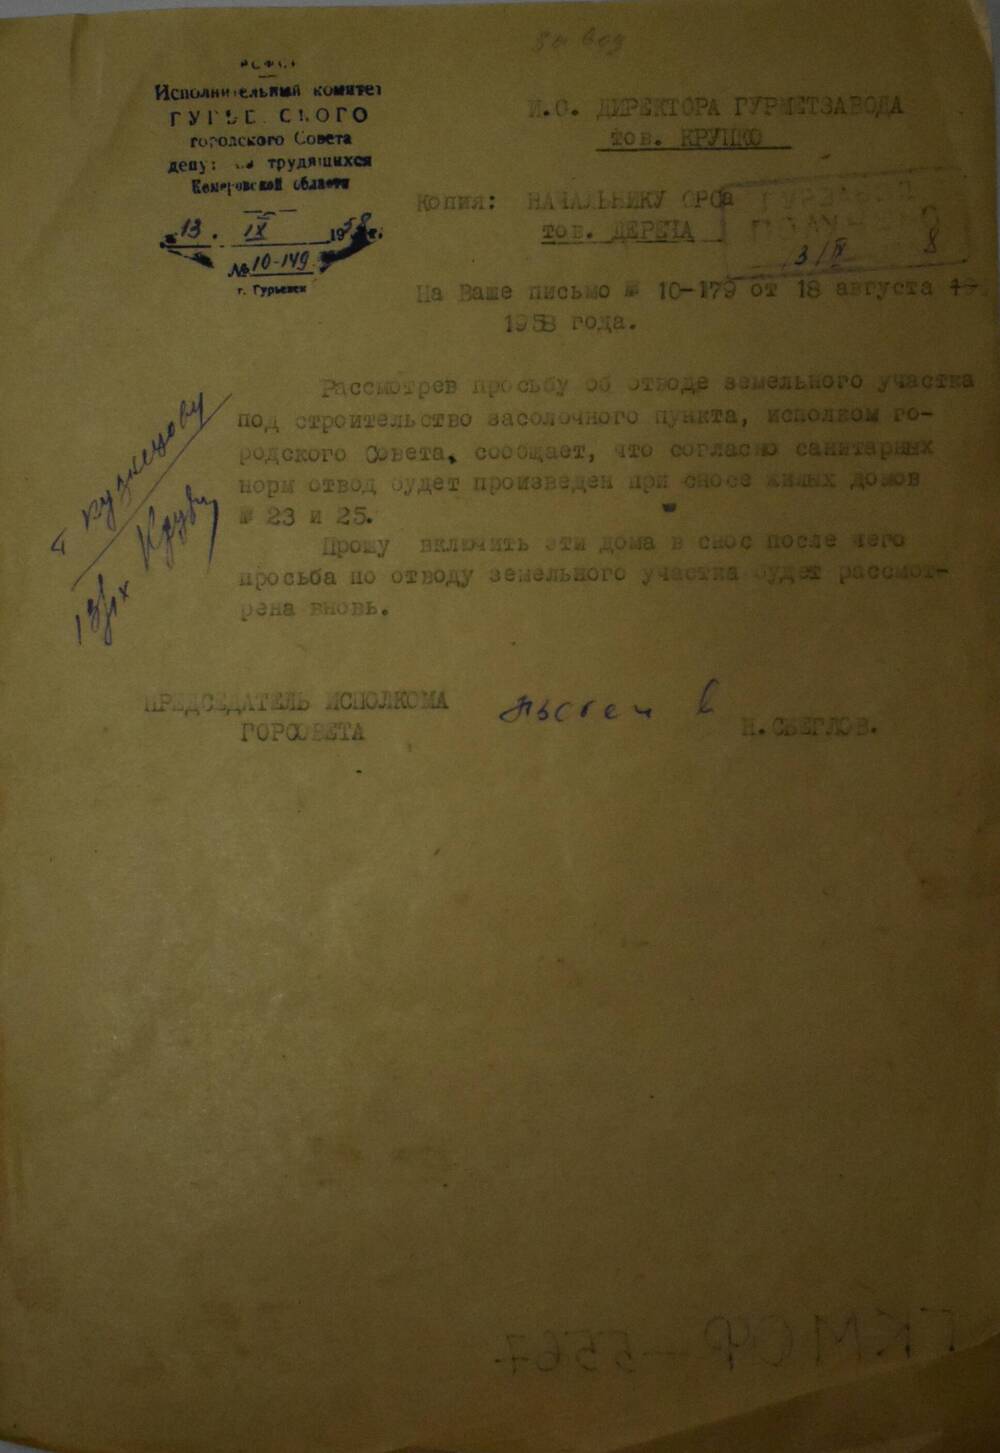 Письмо - ответ № 10 - 149 Председателя Исполкома от 13.08.1958 г